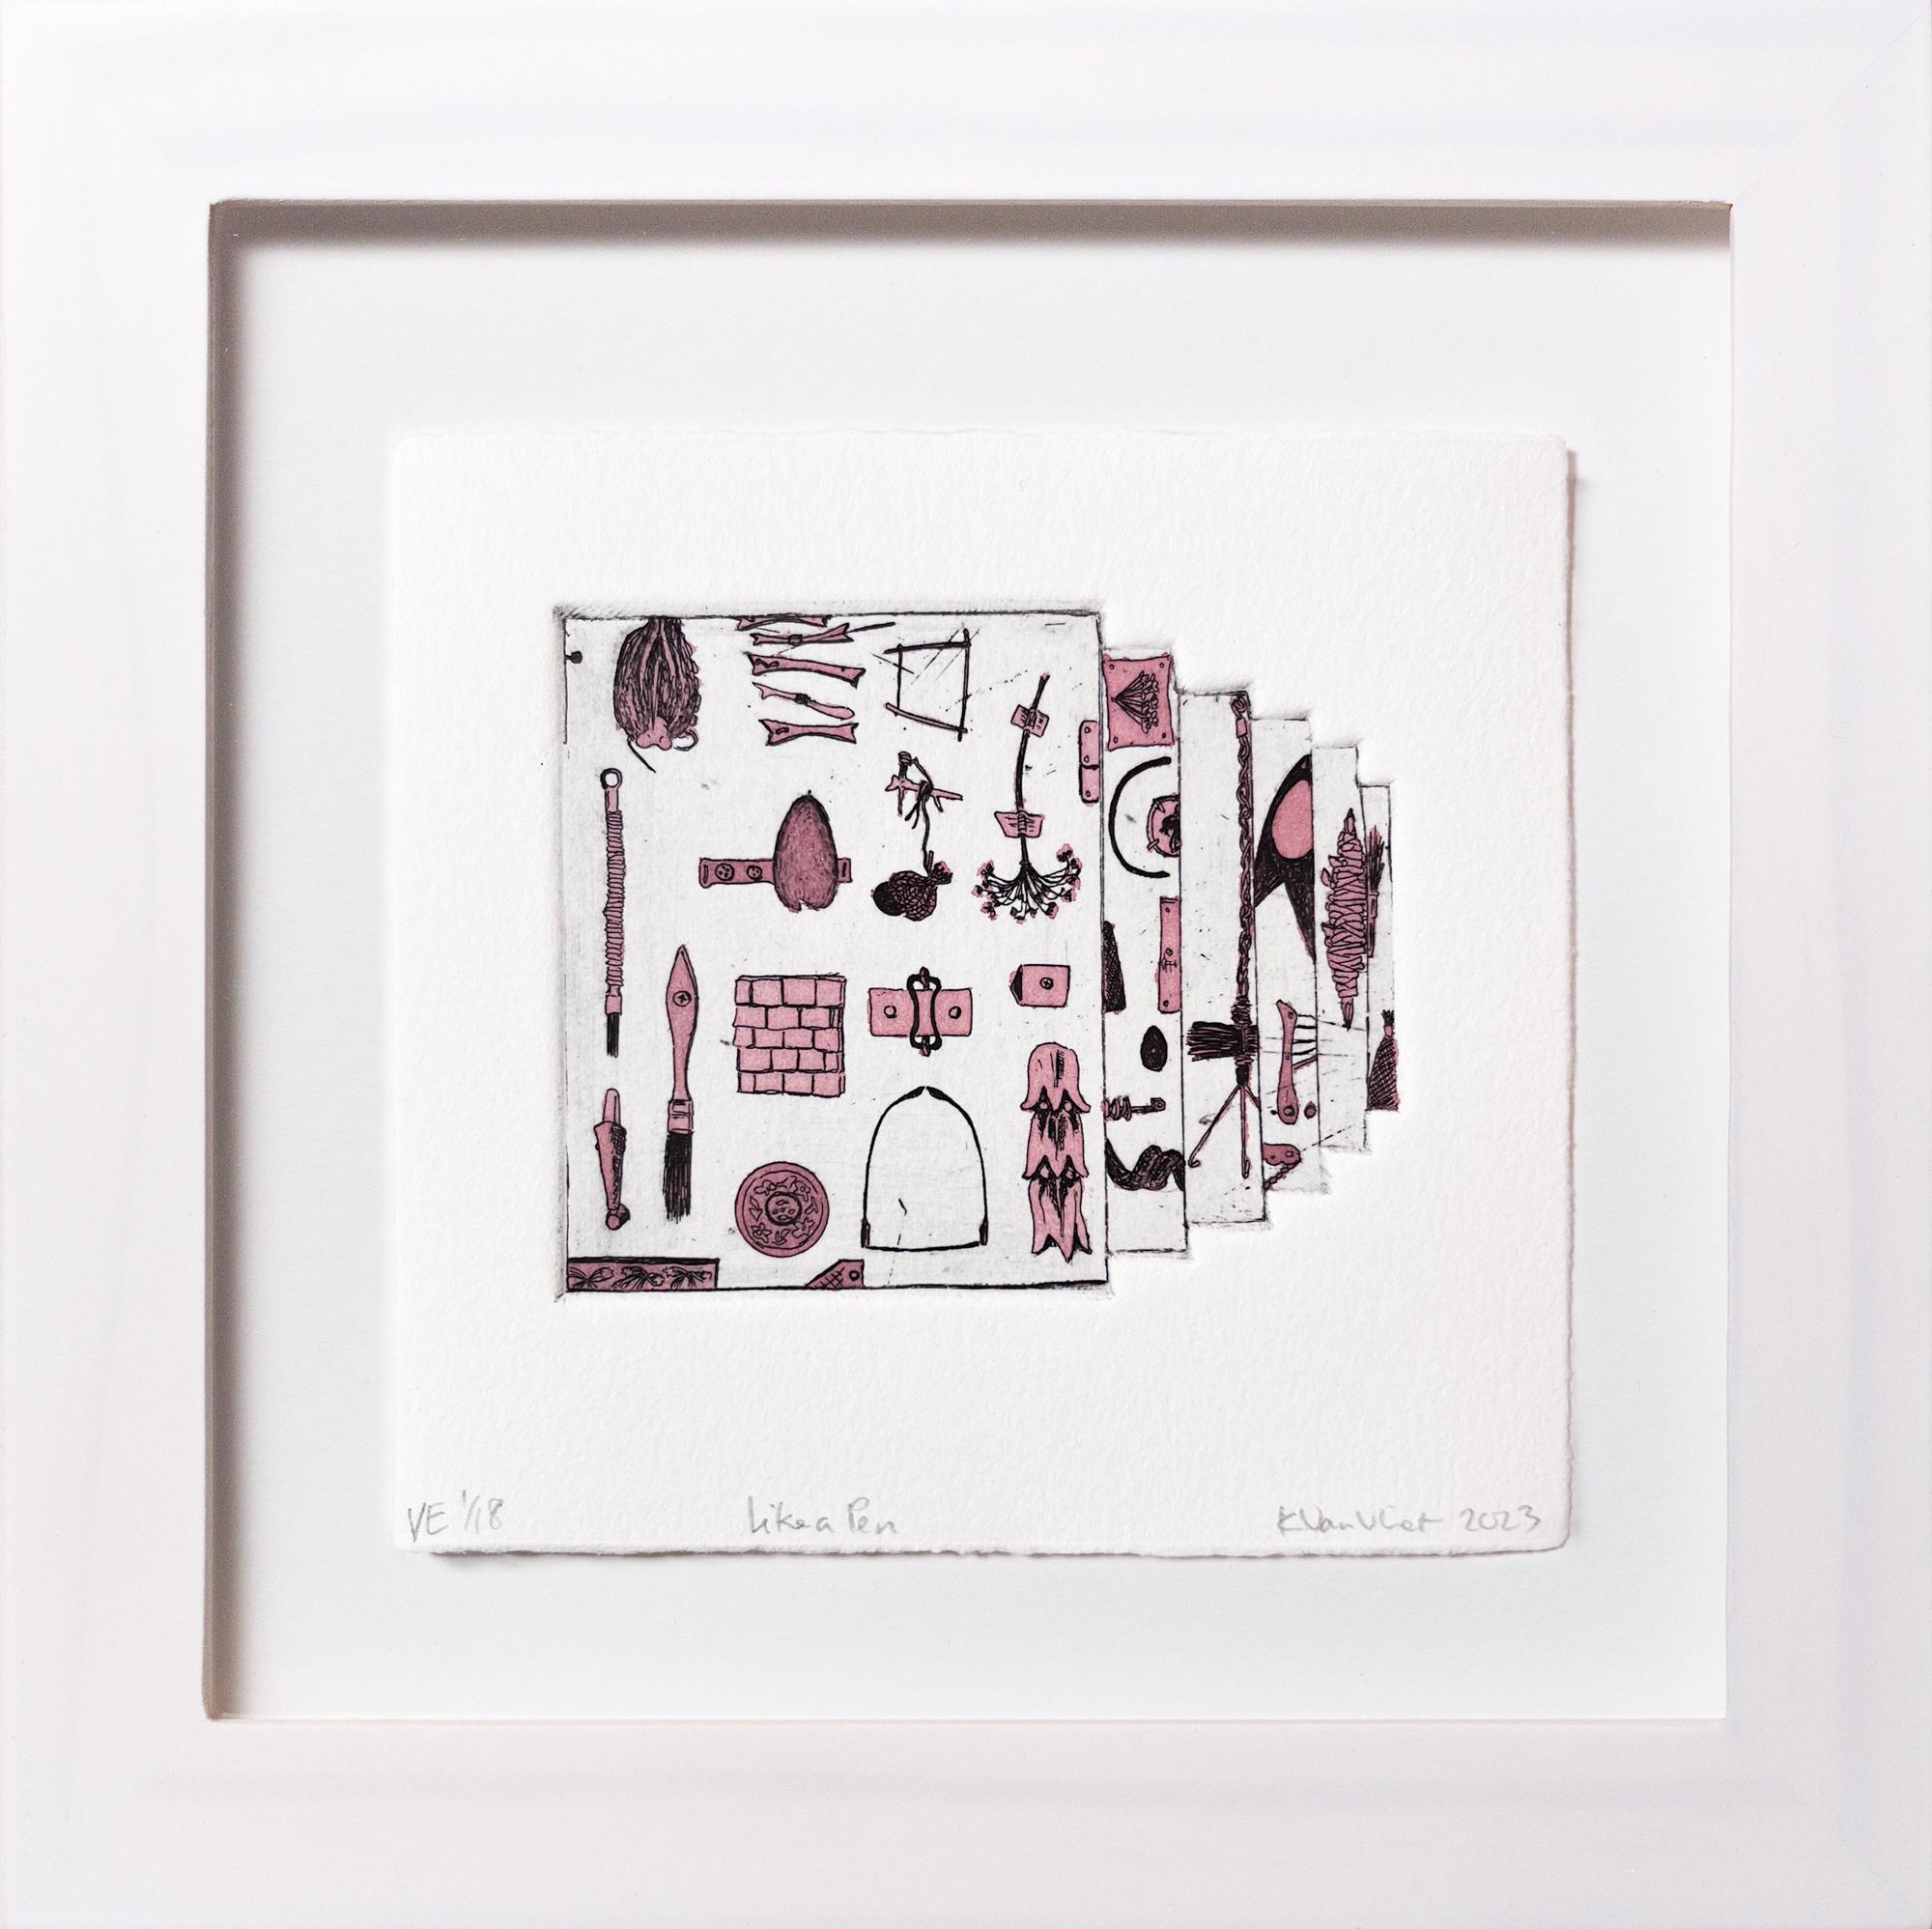 Katie VanVliet Still-Life Print - "Like a Pen VE 1/18" Intaglio, hand colored, tool motifs